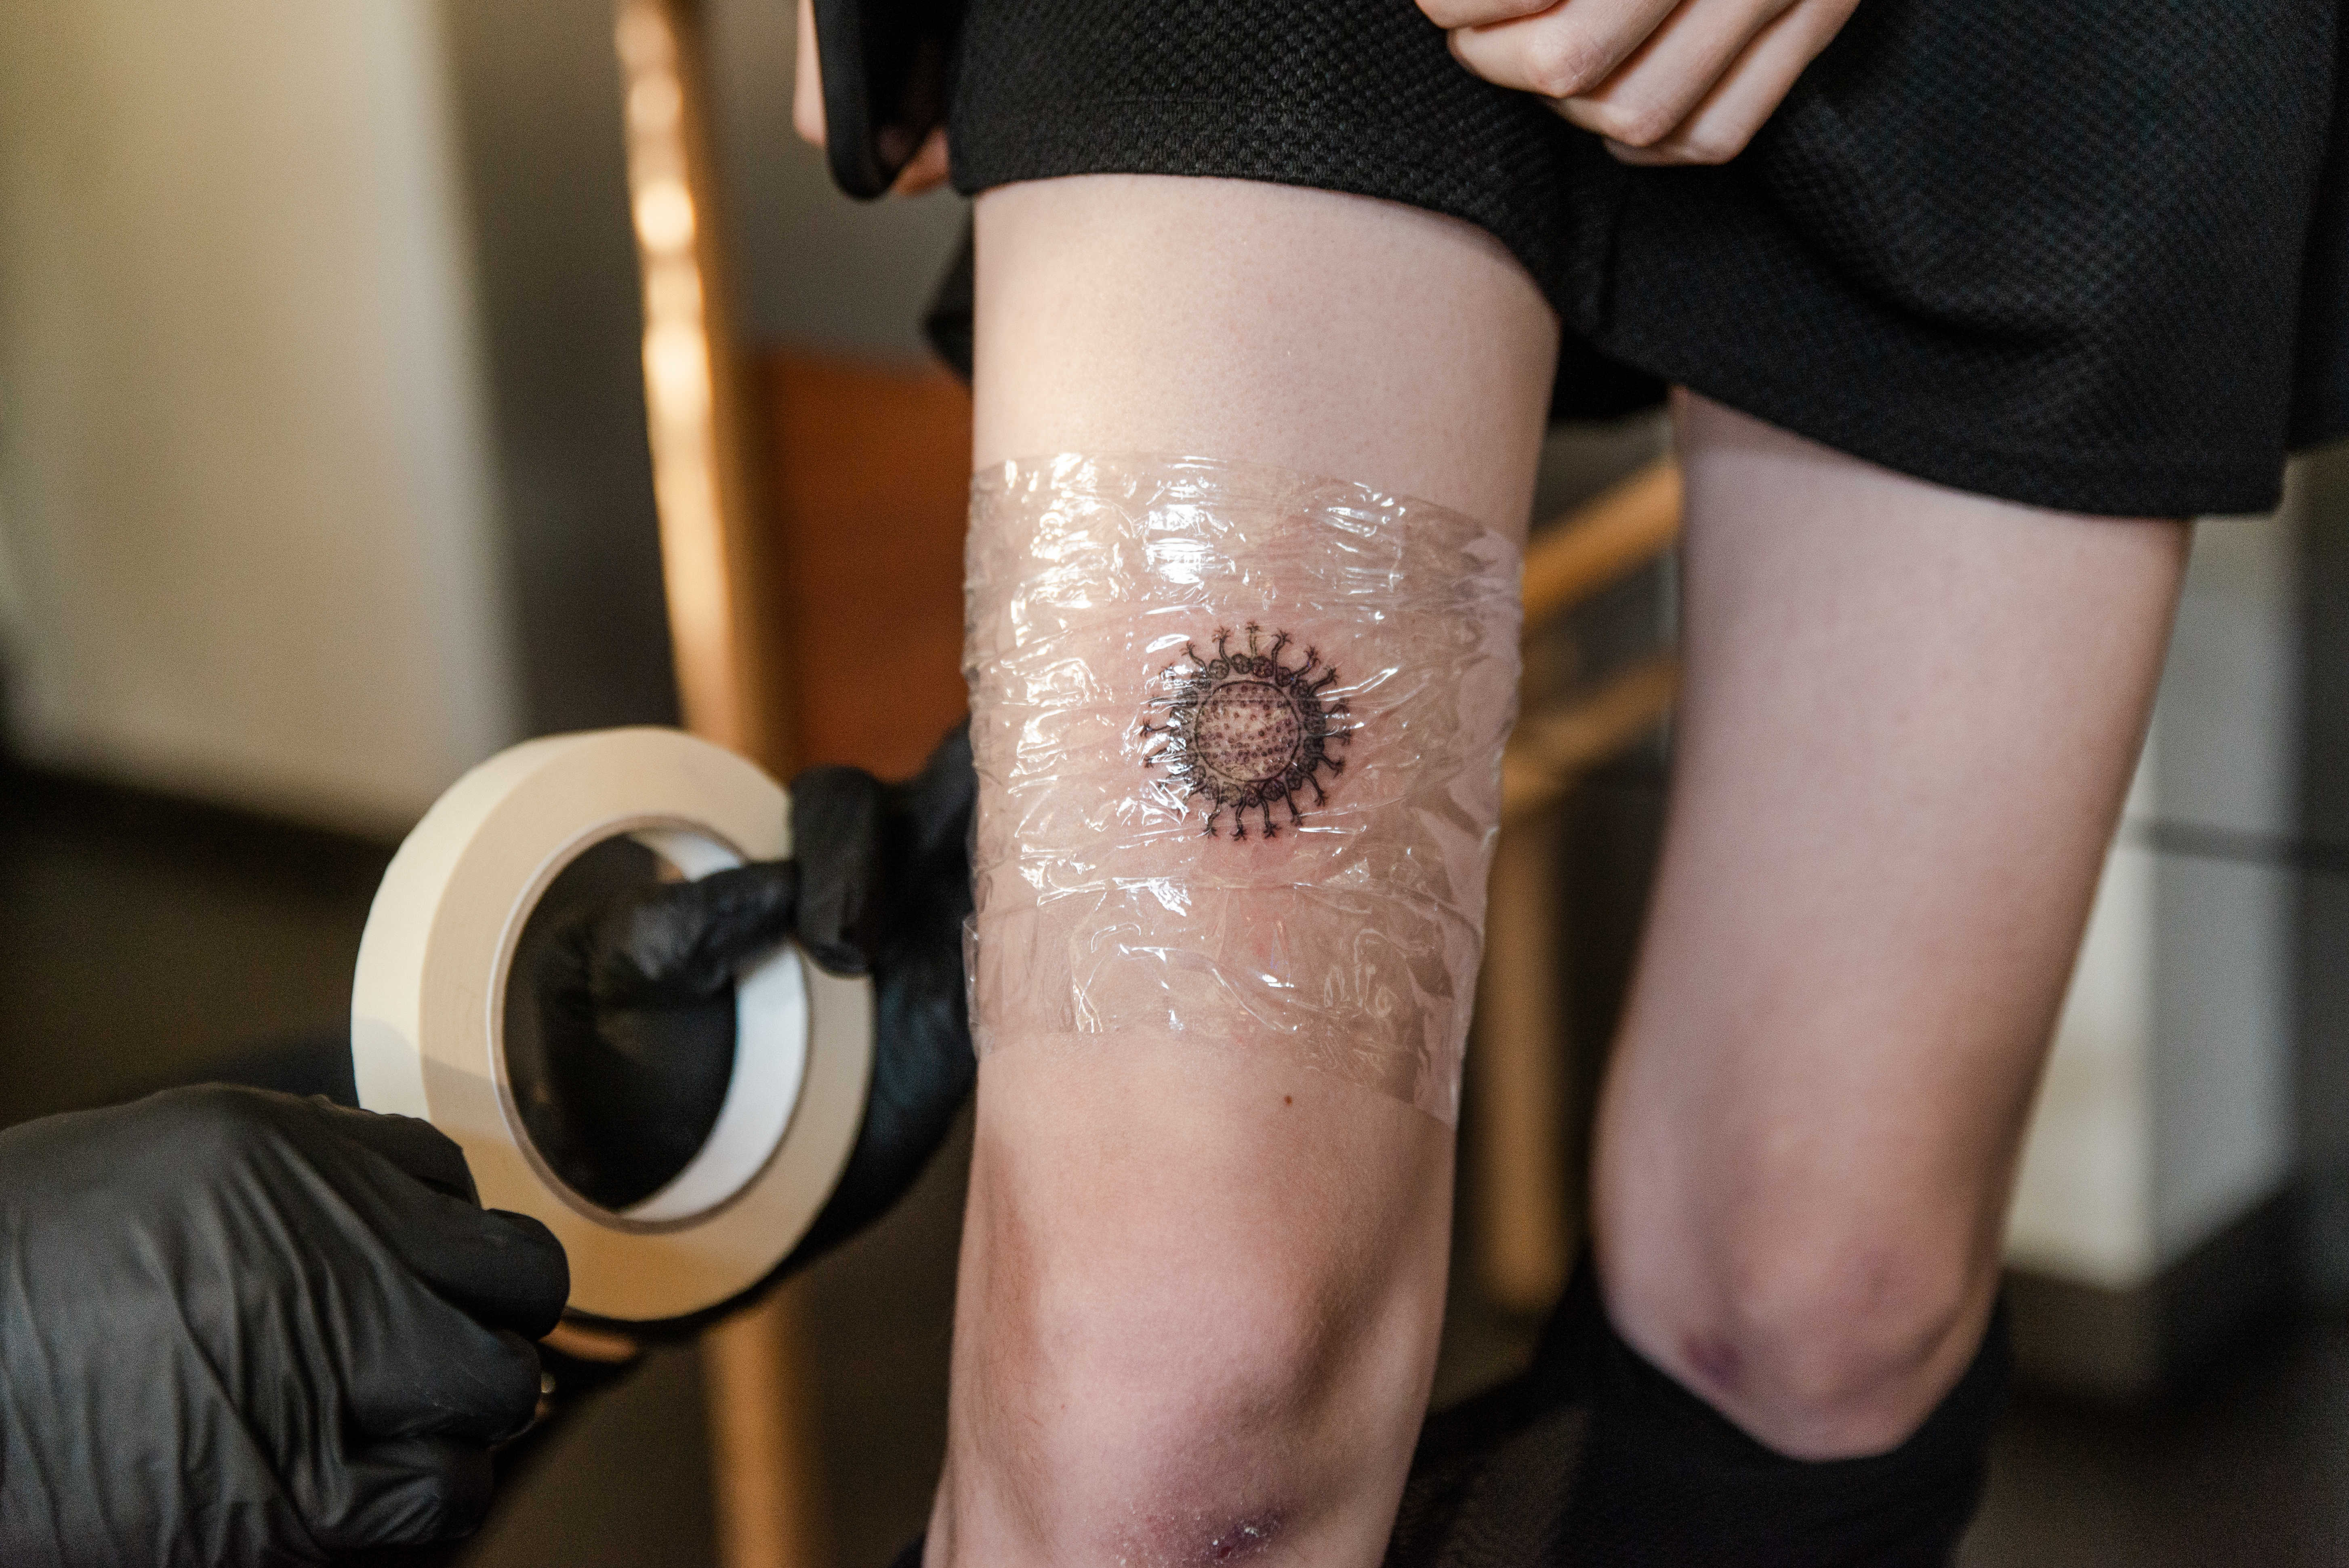 Amsterdam Tattoo Convention 2019 - Artists - Tattoo Expo